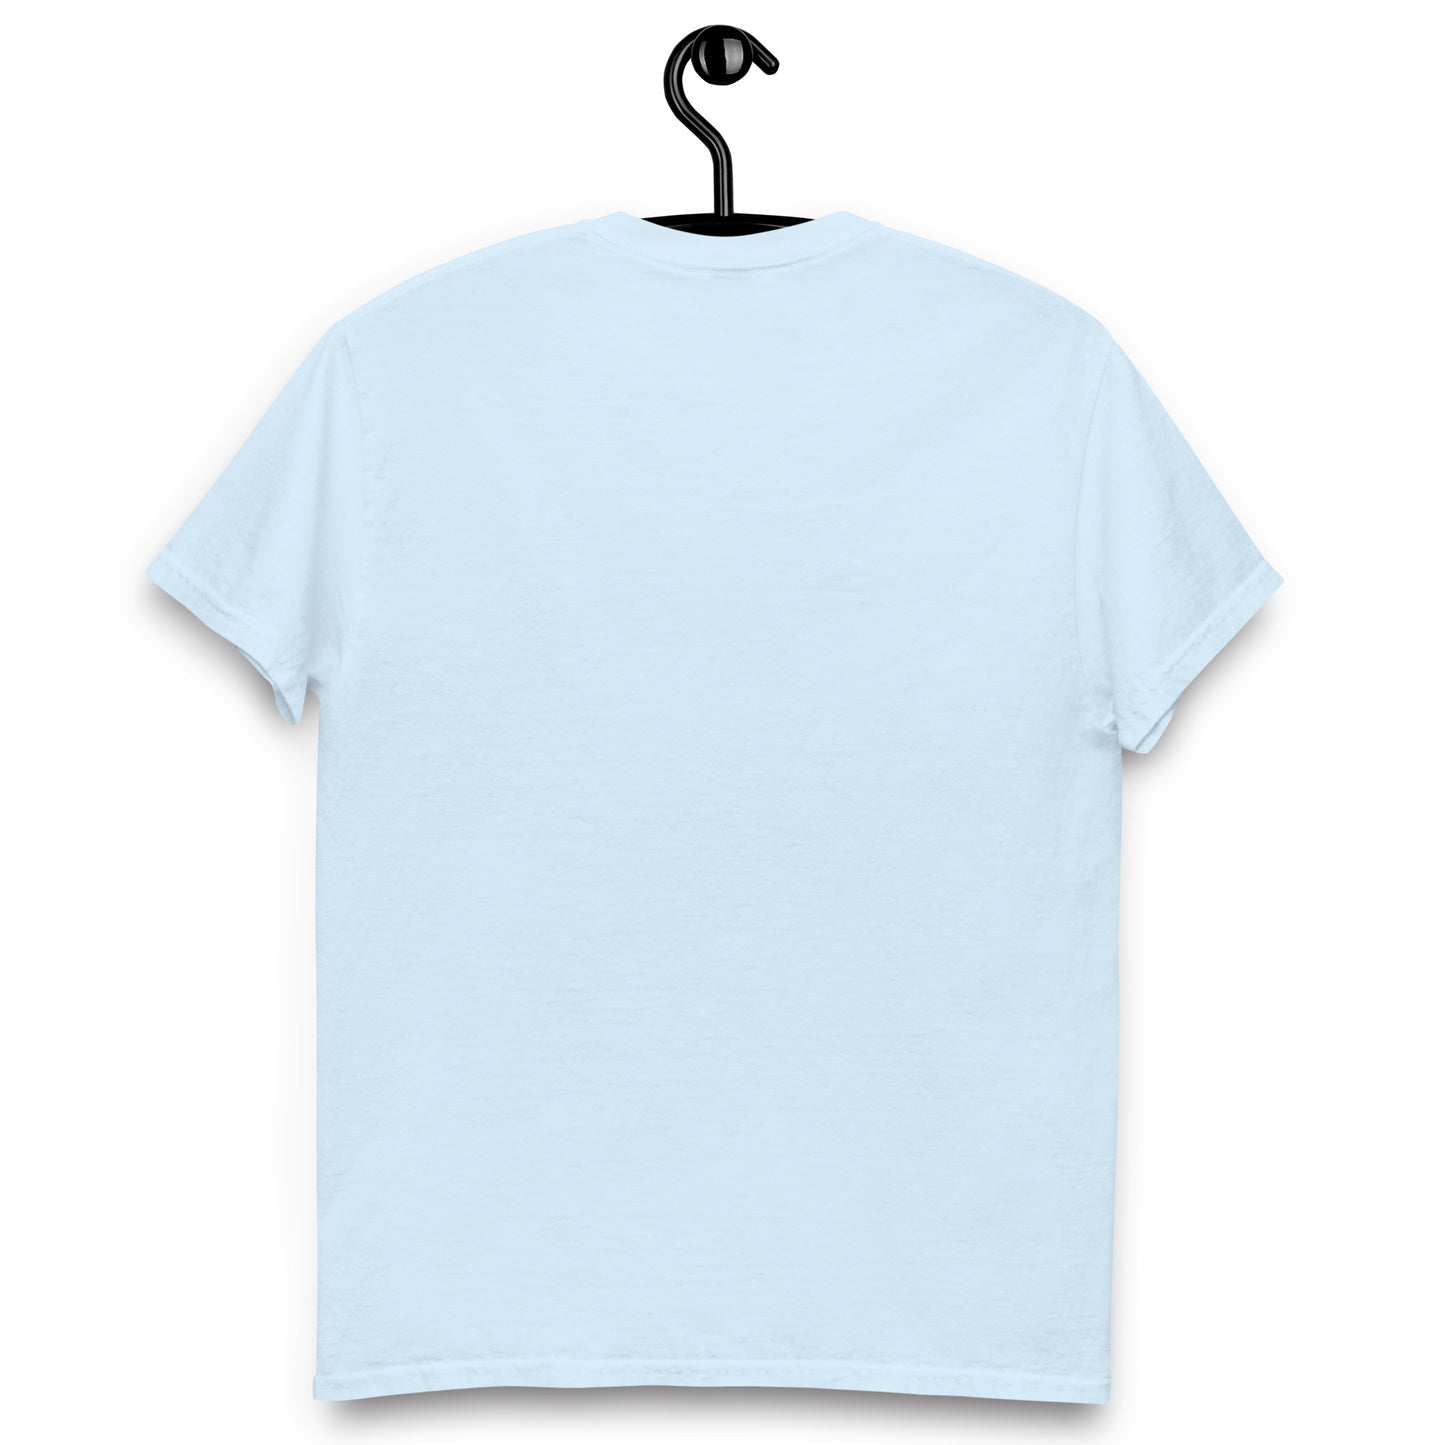 Unisex Short Sleeve shirt - Save From Evil (Kawaii)